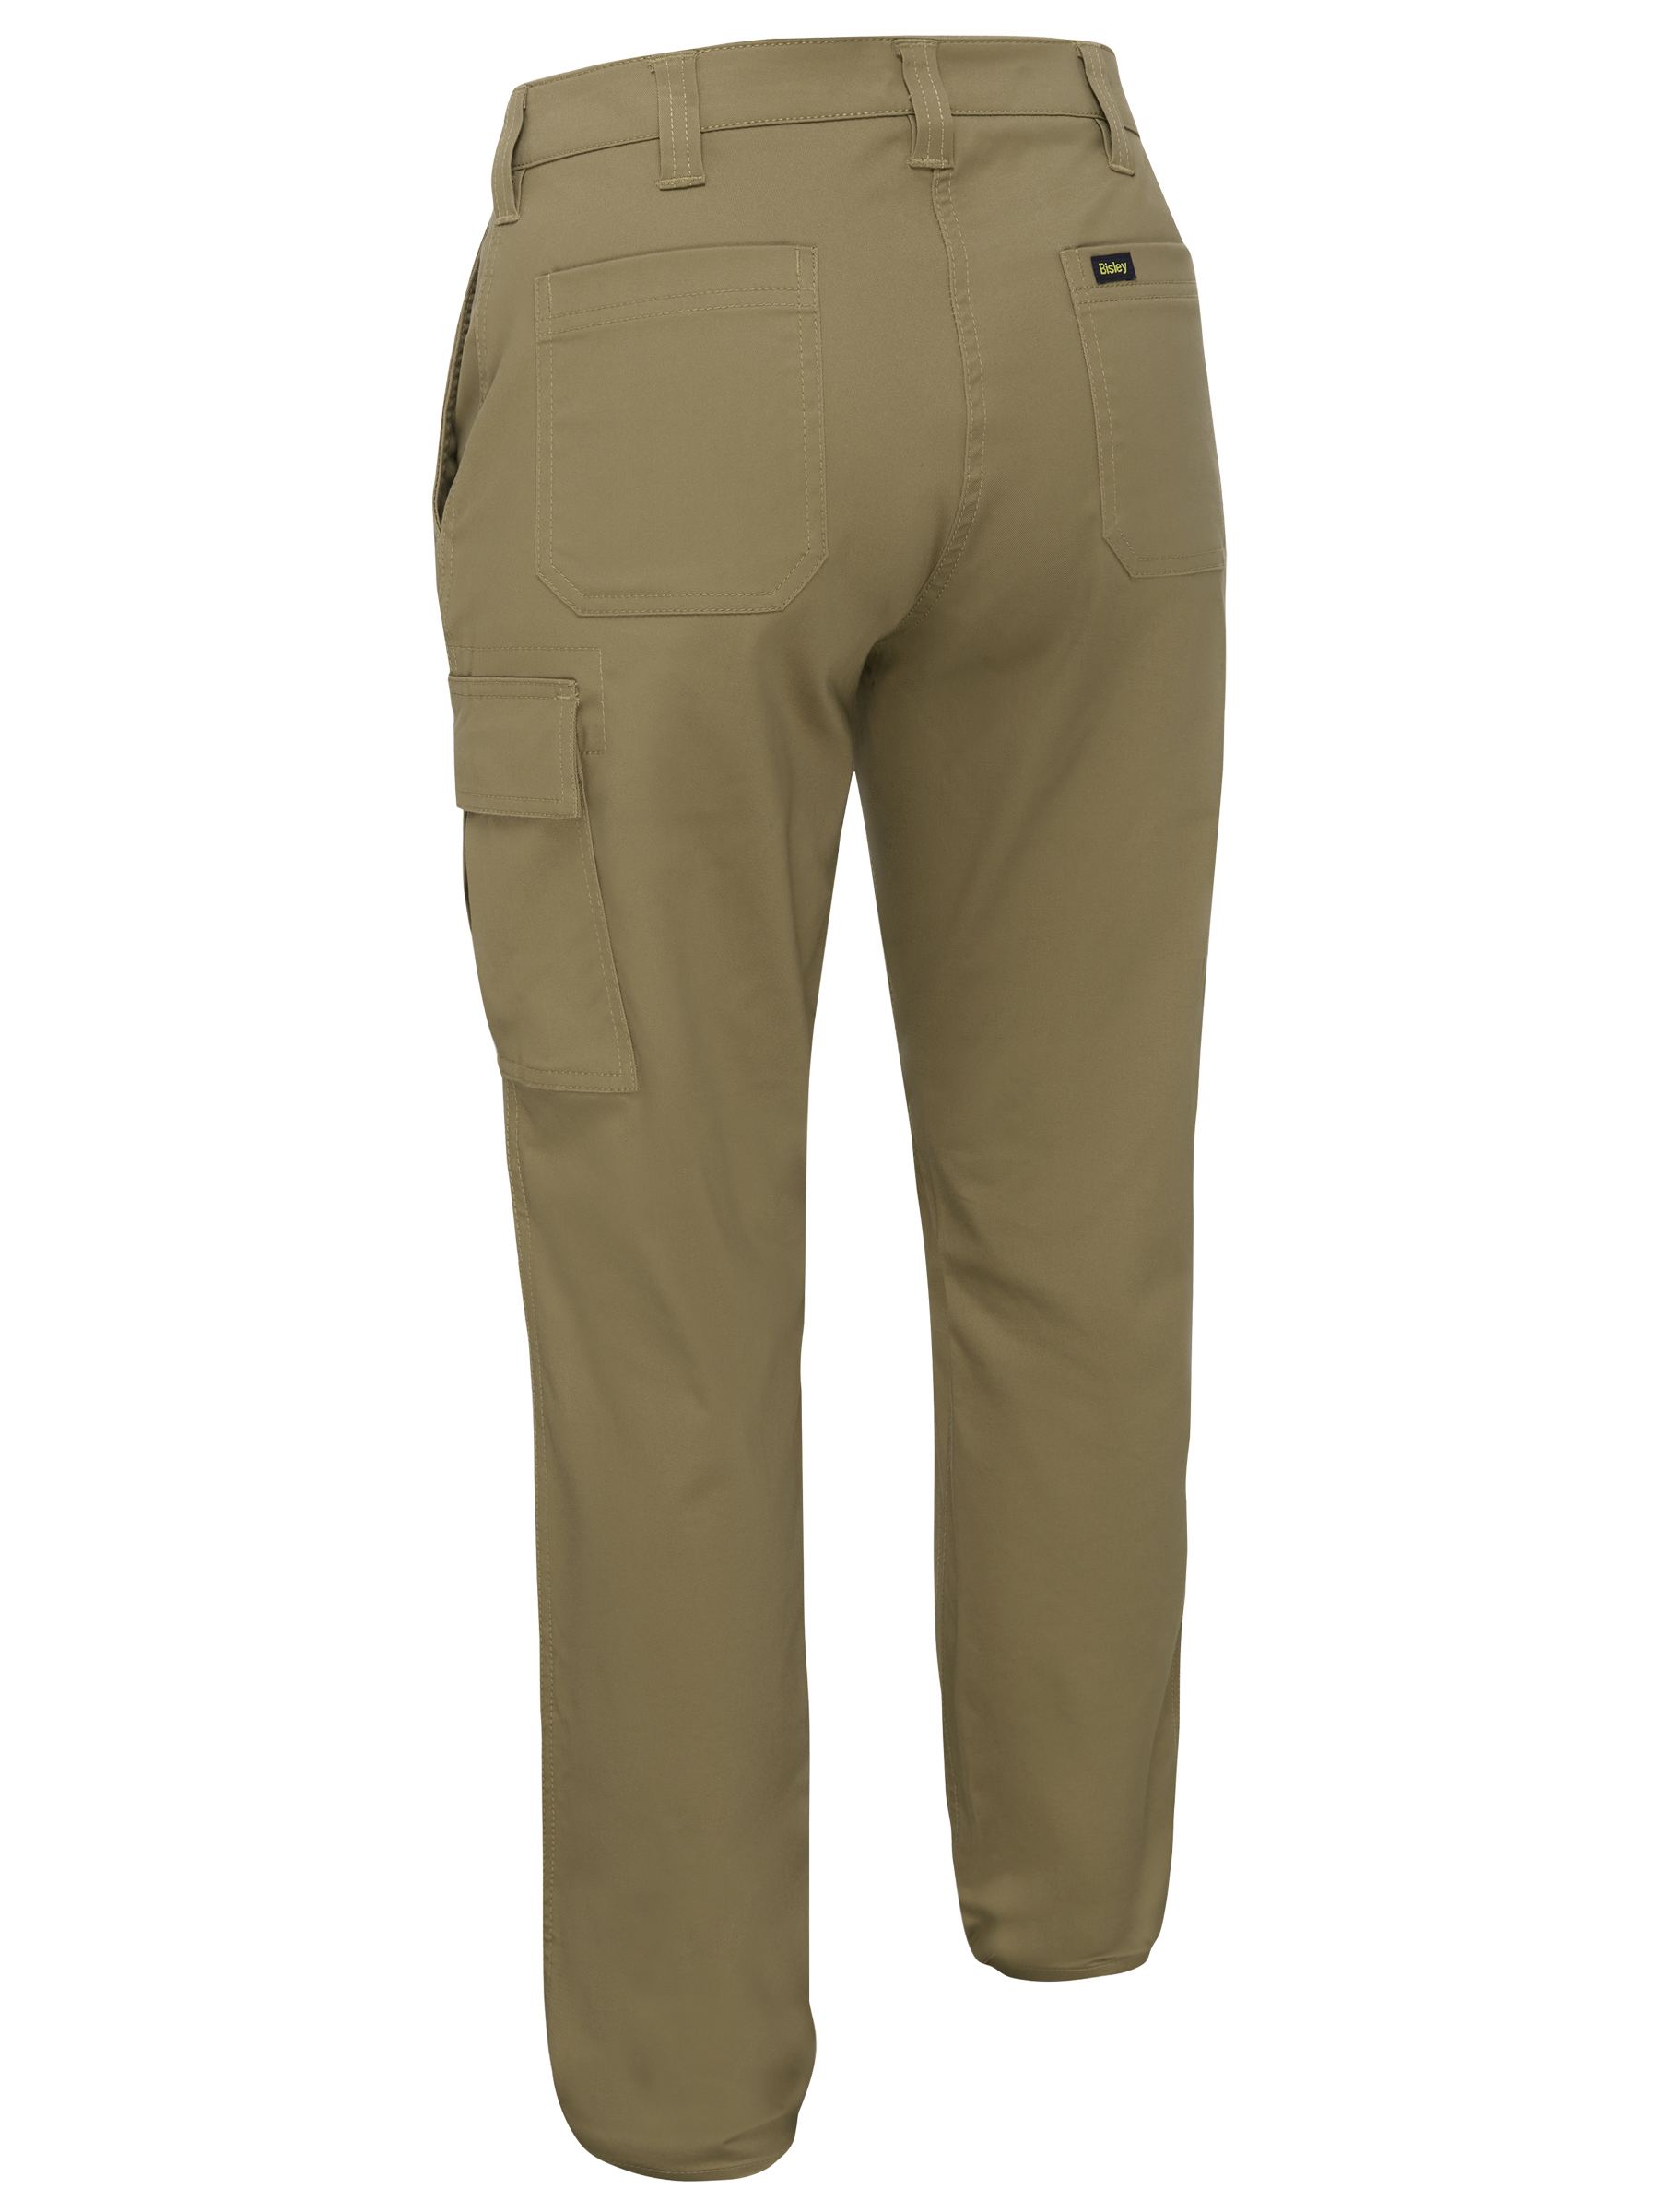 Women's stretch cotton cargo pants - BPLC6008 - Bisley Workwear